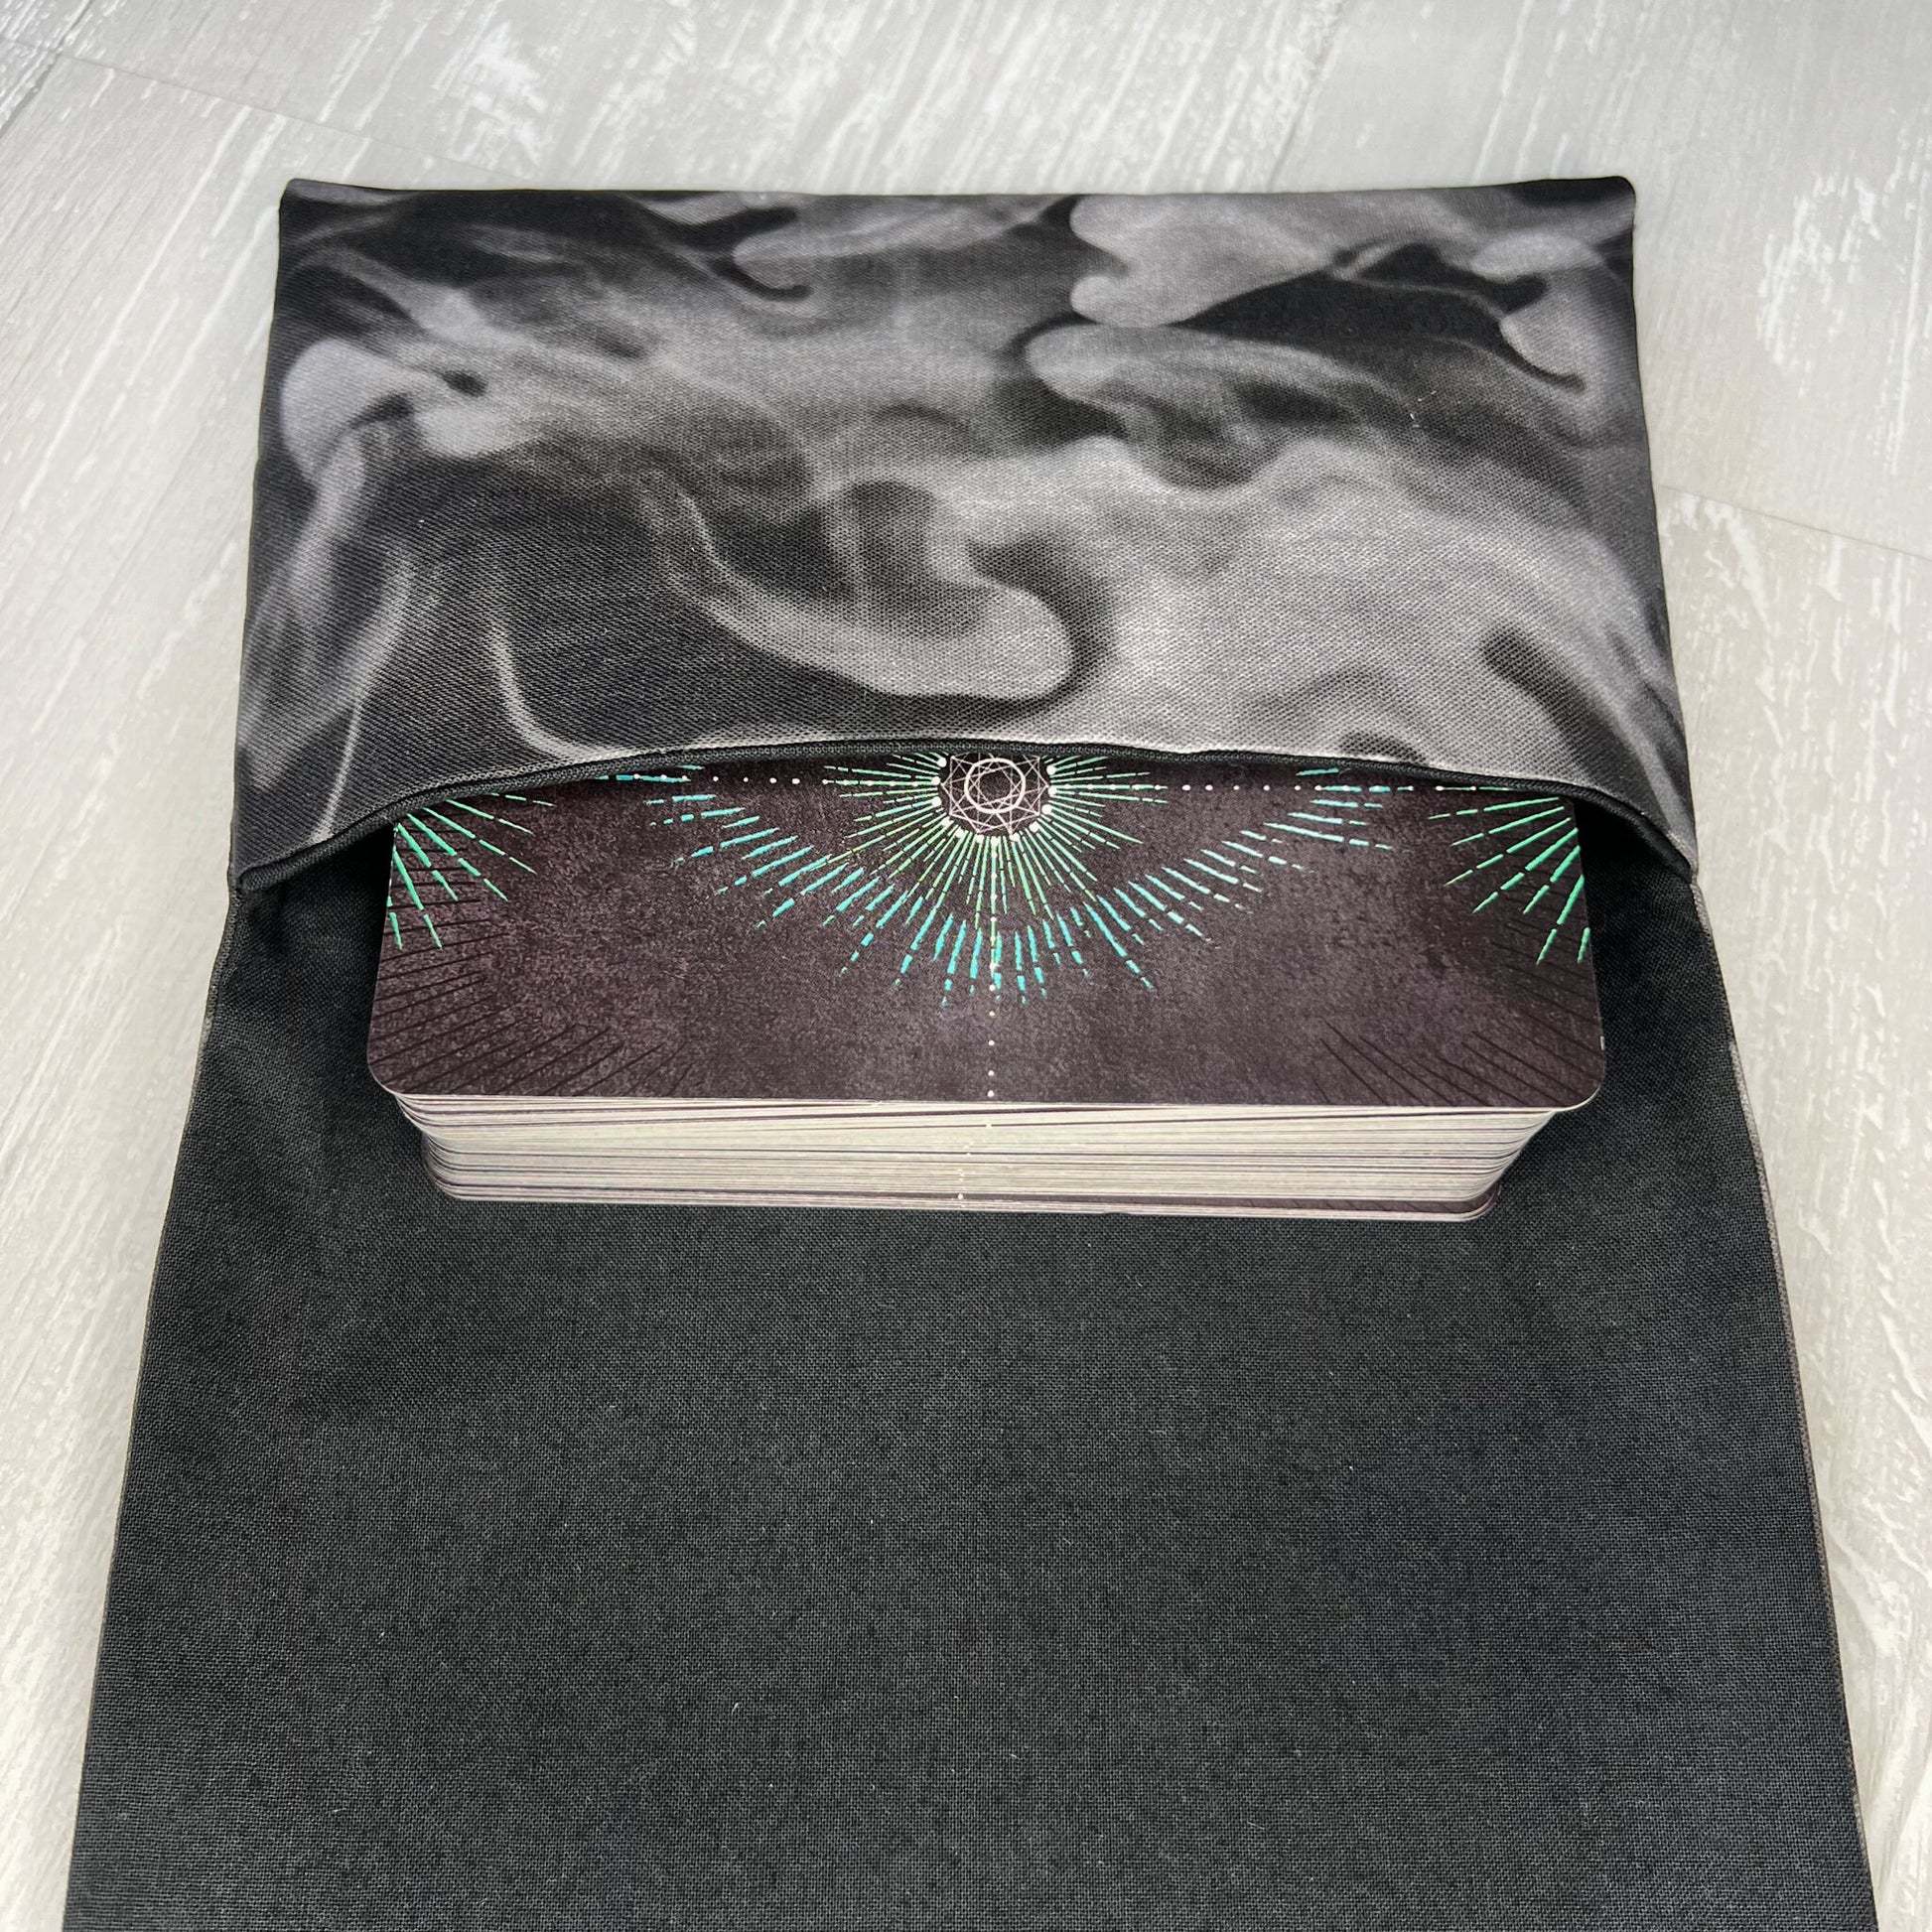 Gray & Black Tarot Wrap, Smoky Air Element Tarot Fold Over Pouch, Tarot Supplies and Accessories, Tarot Card Holder, Divination Tools